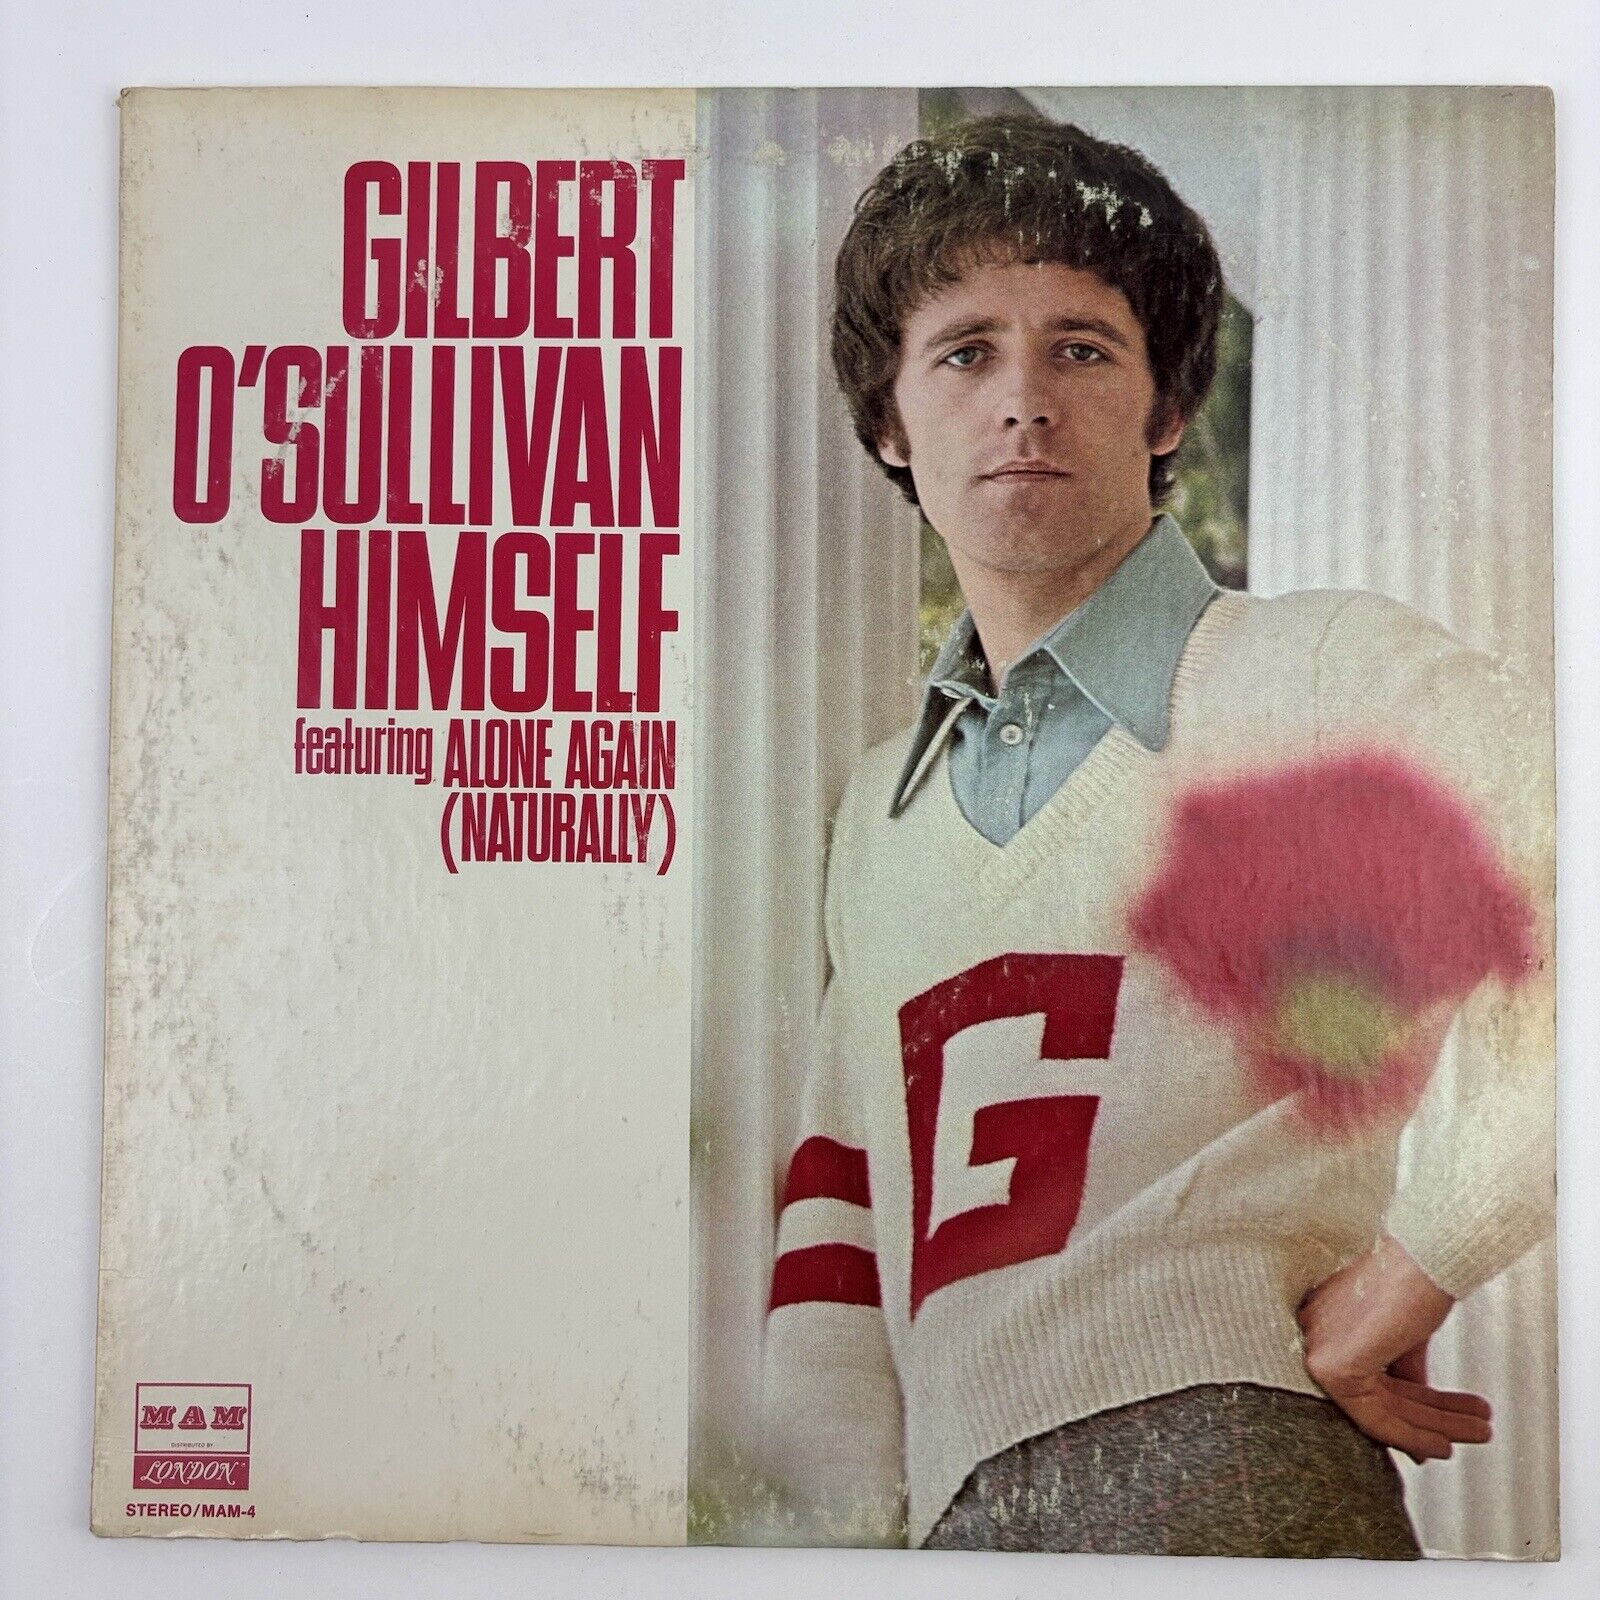 Gilbert O'Sullivan Himself Vinyl Lp Record Alone Again Naturally LP 1972 MAM-4